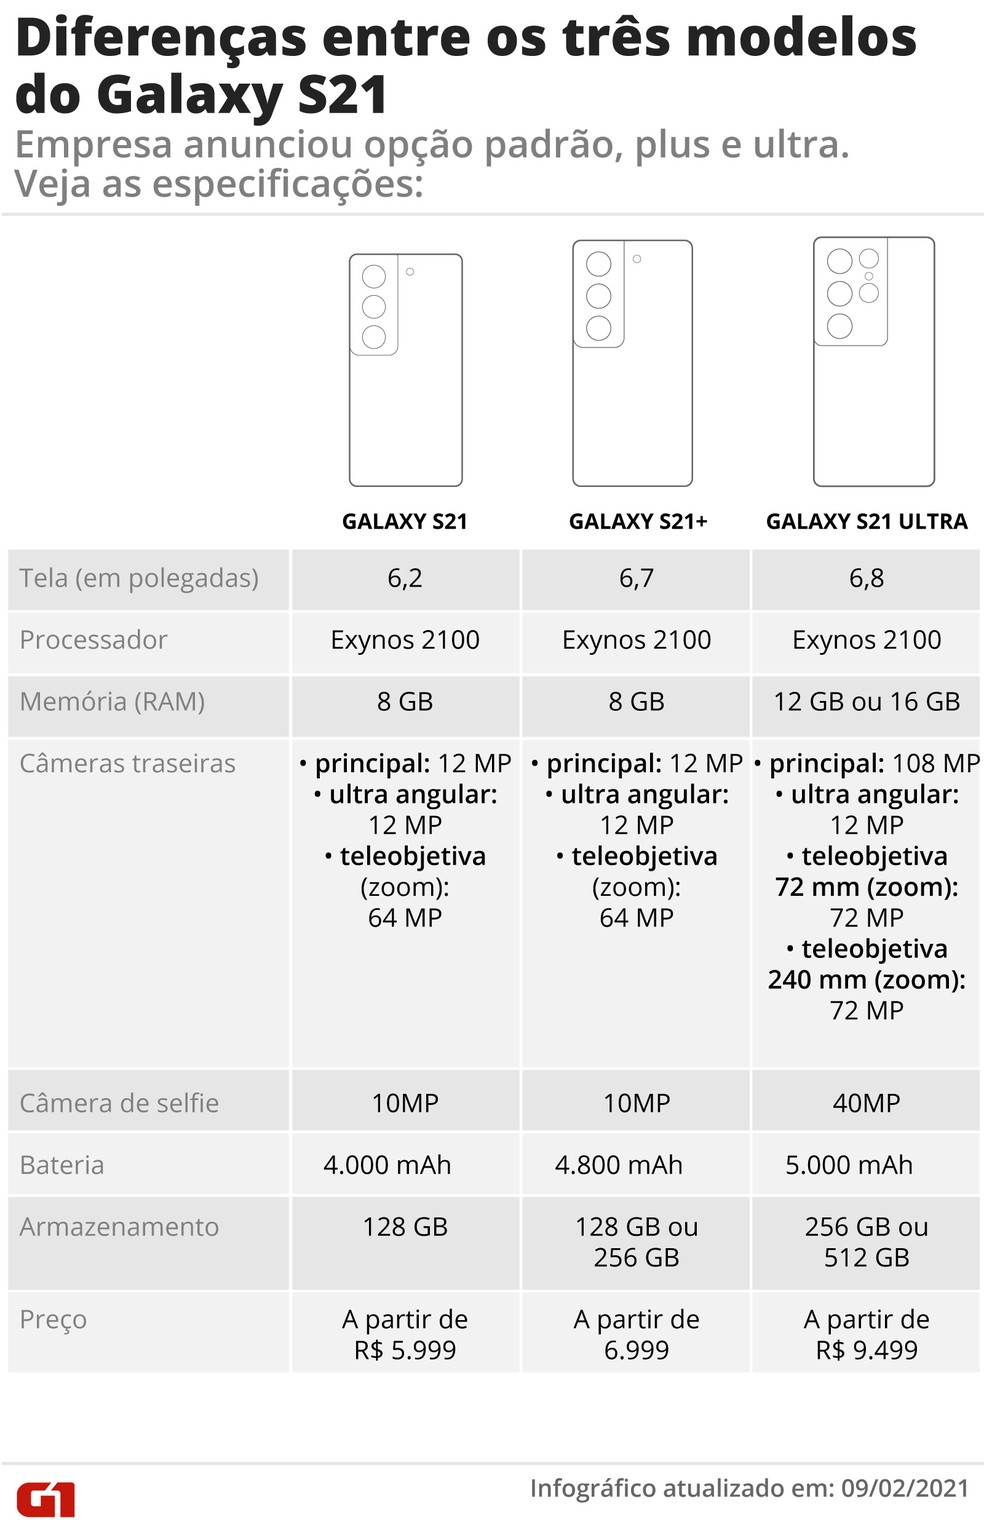 Samsung lança Galaxy S21 no Brasil; saiba os preços